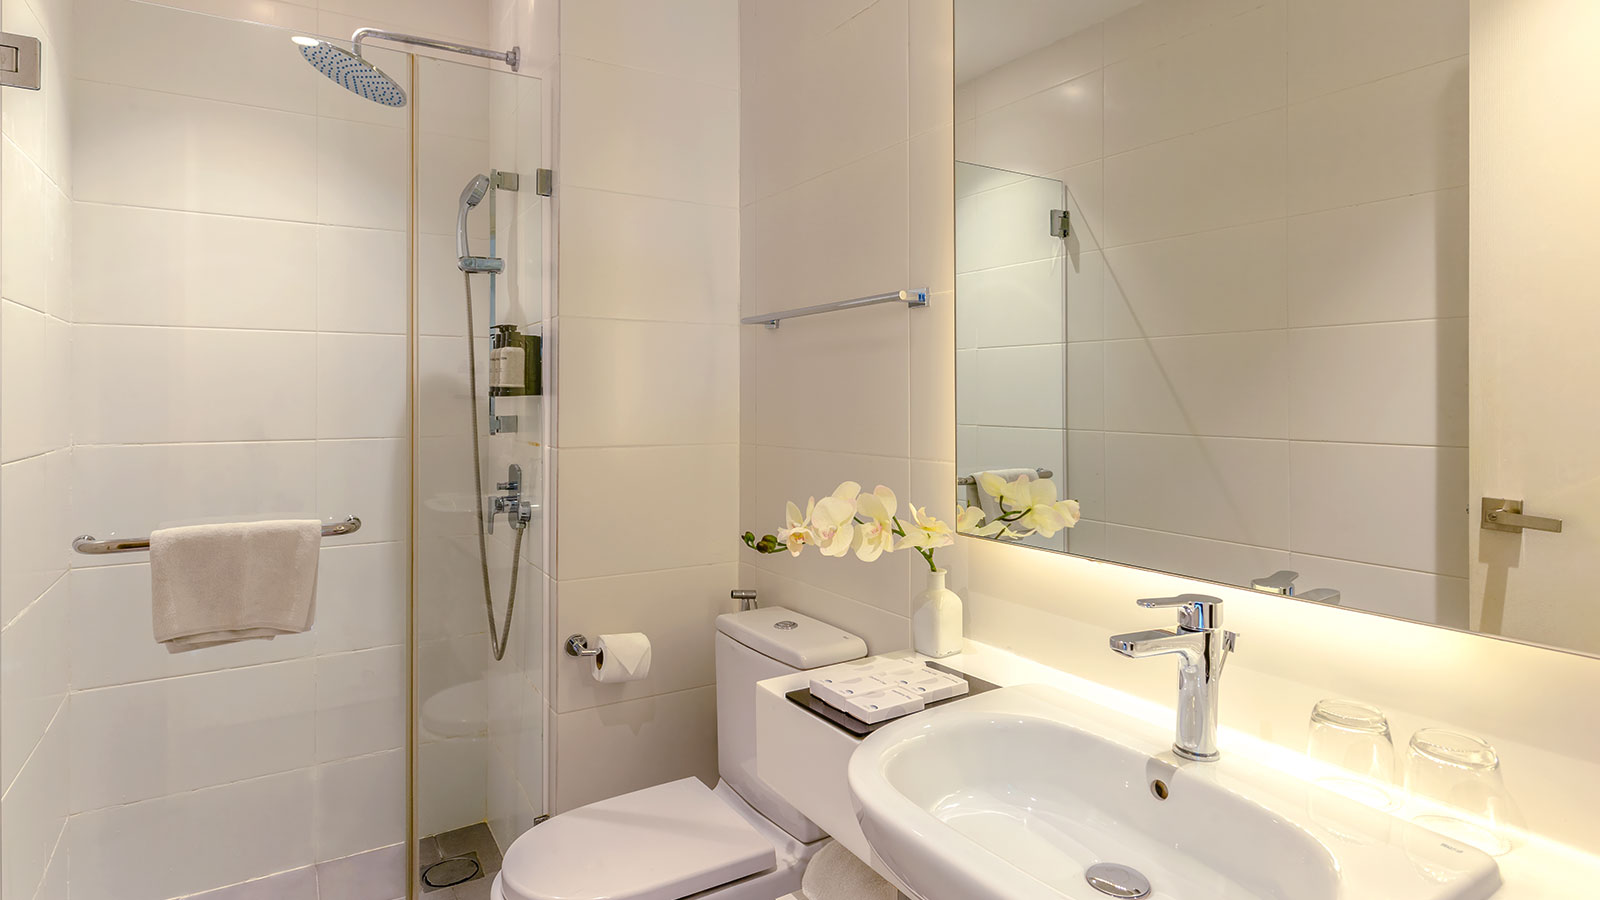 Shama Suasana Johor Bahru - Two Bedroom Suite Bathroom - Shama Suasana Johor Bahru